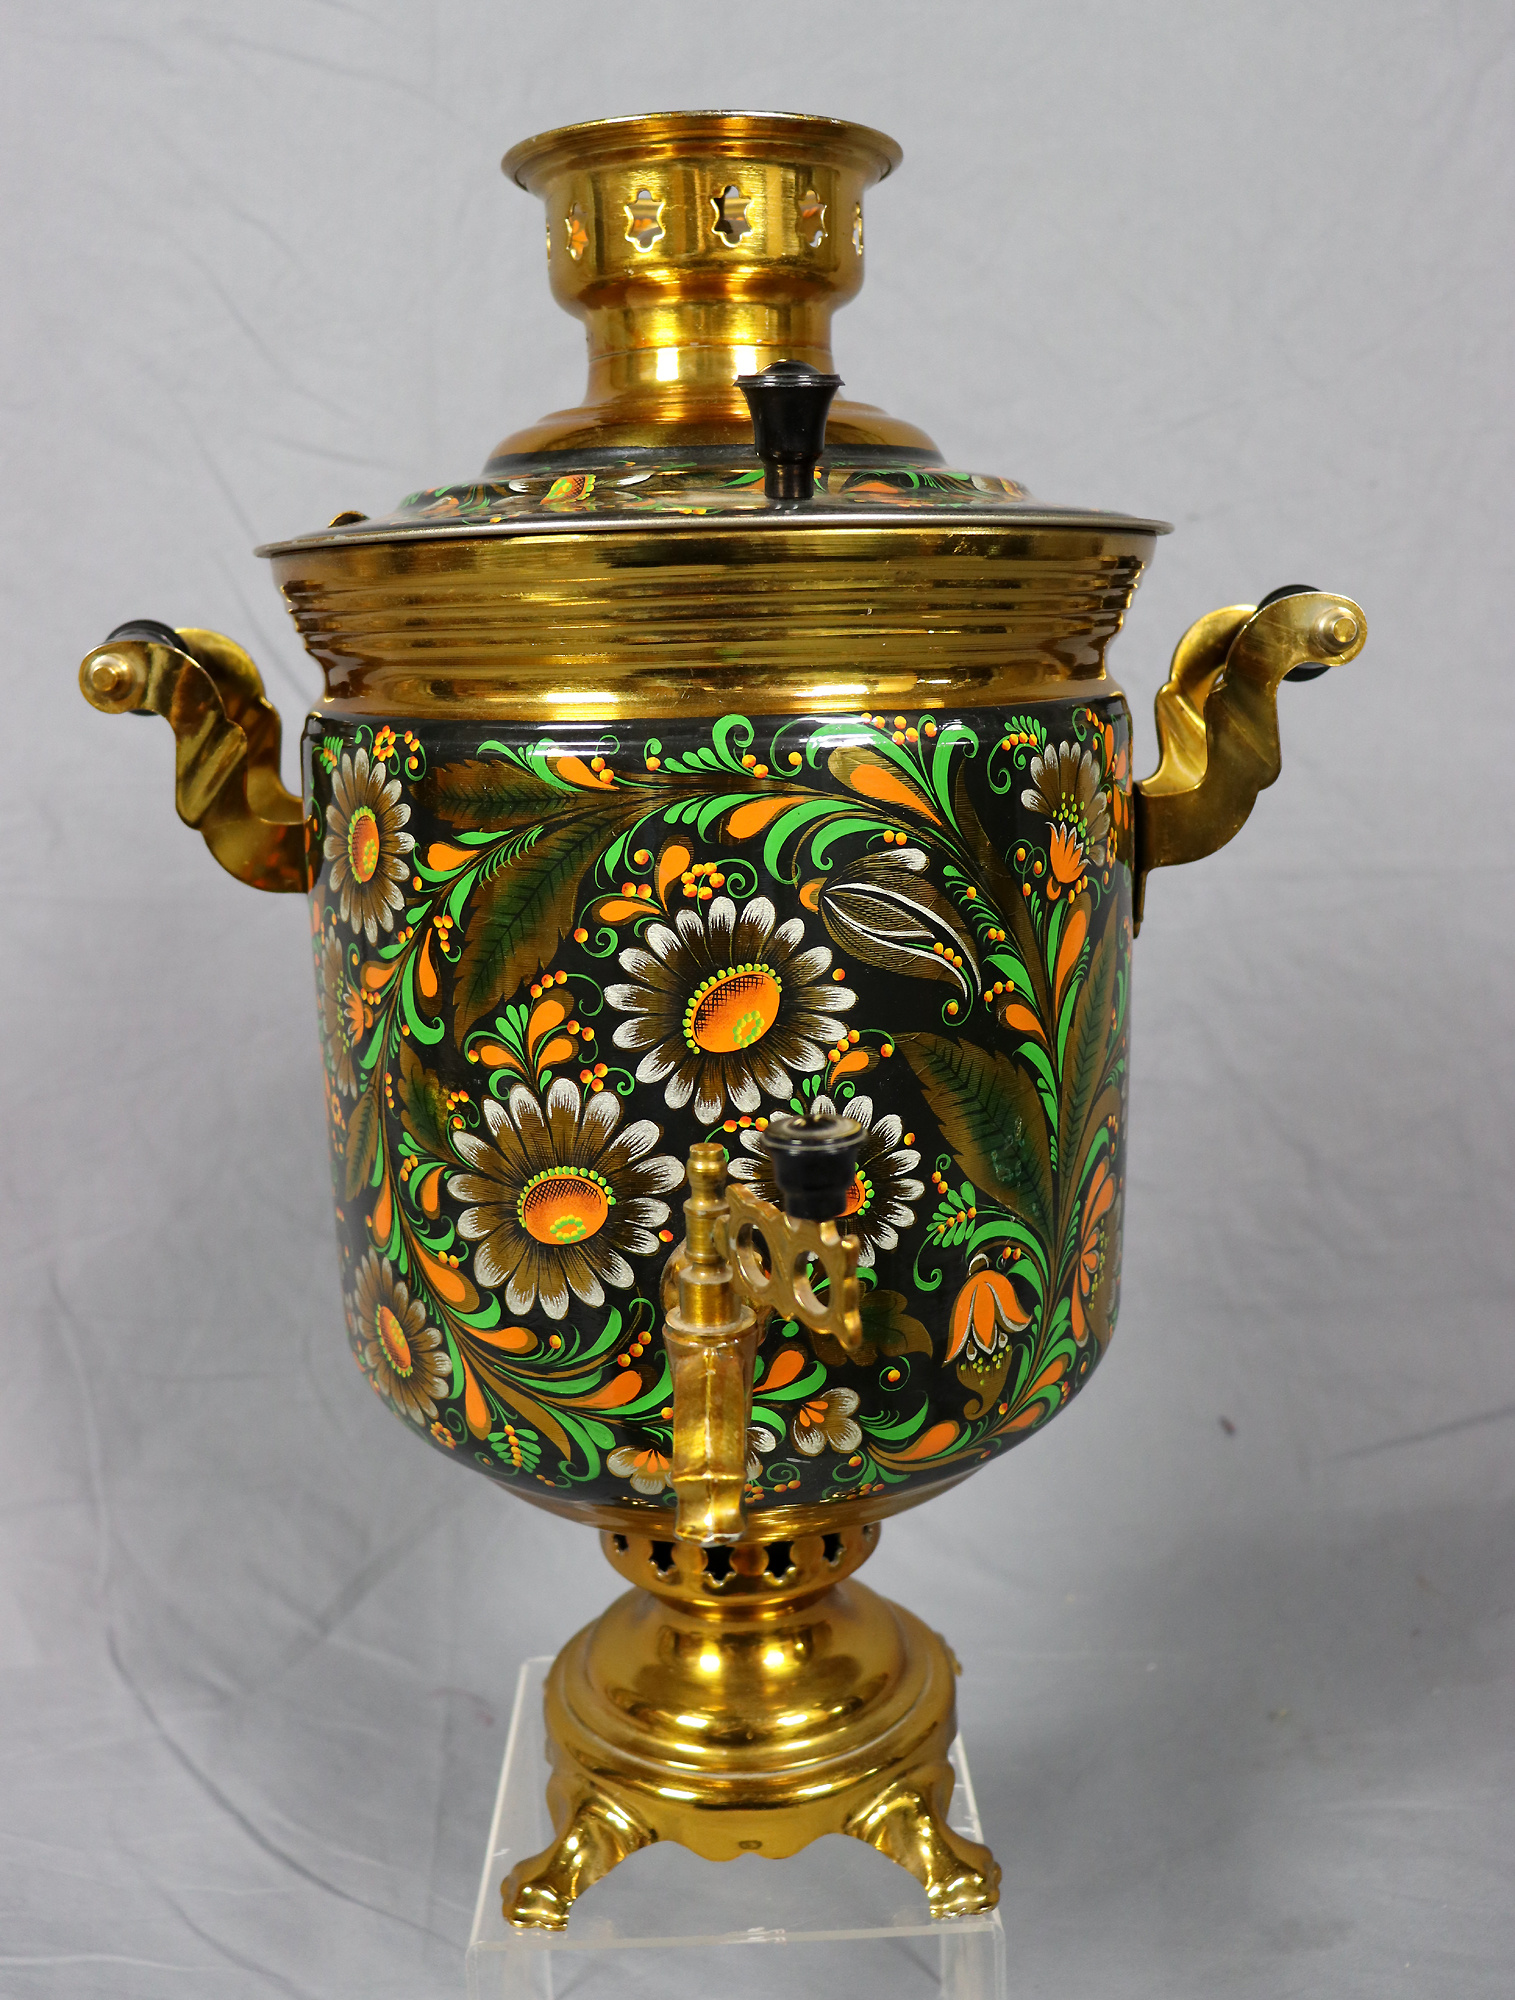 https://cdn.webshopapp.com/shops/127908/files/410097234/antique-imperial-russian-tula-charcoal-brass-samov.jpg